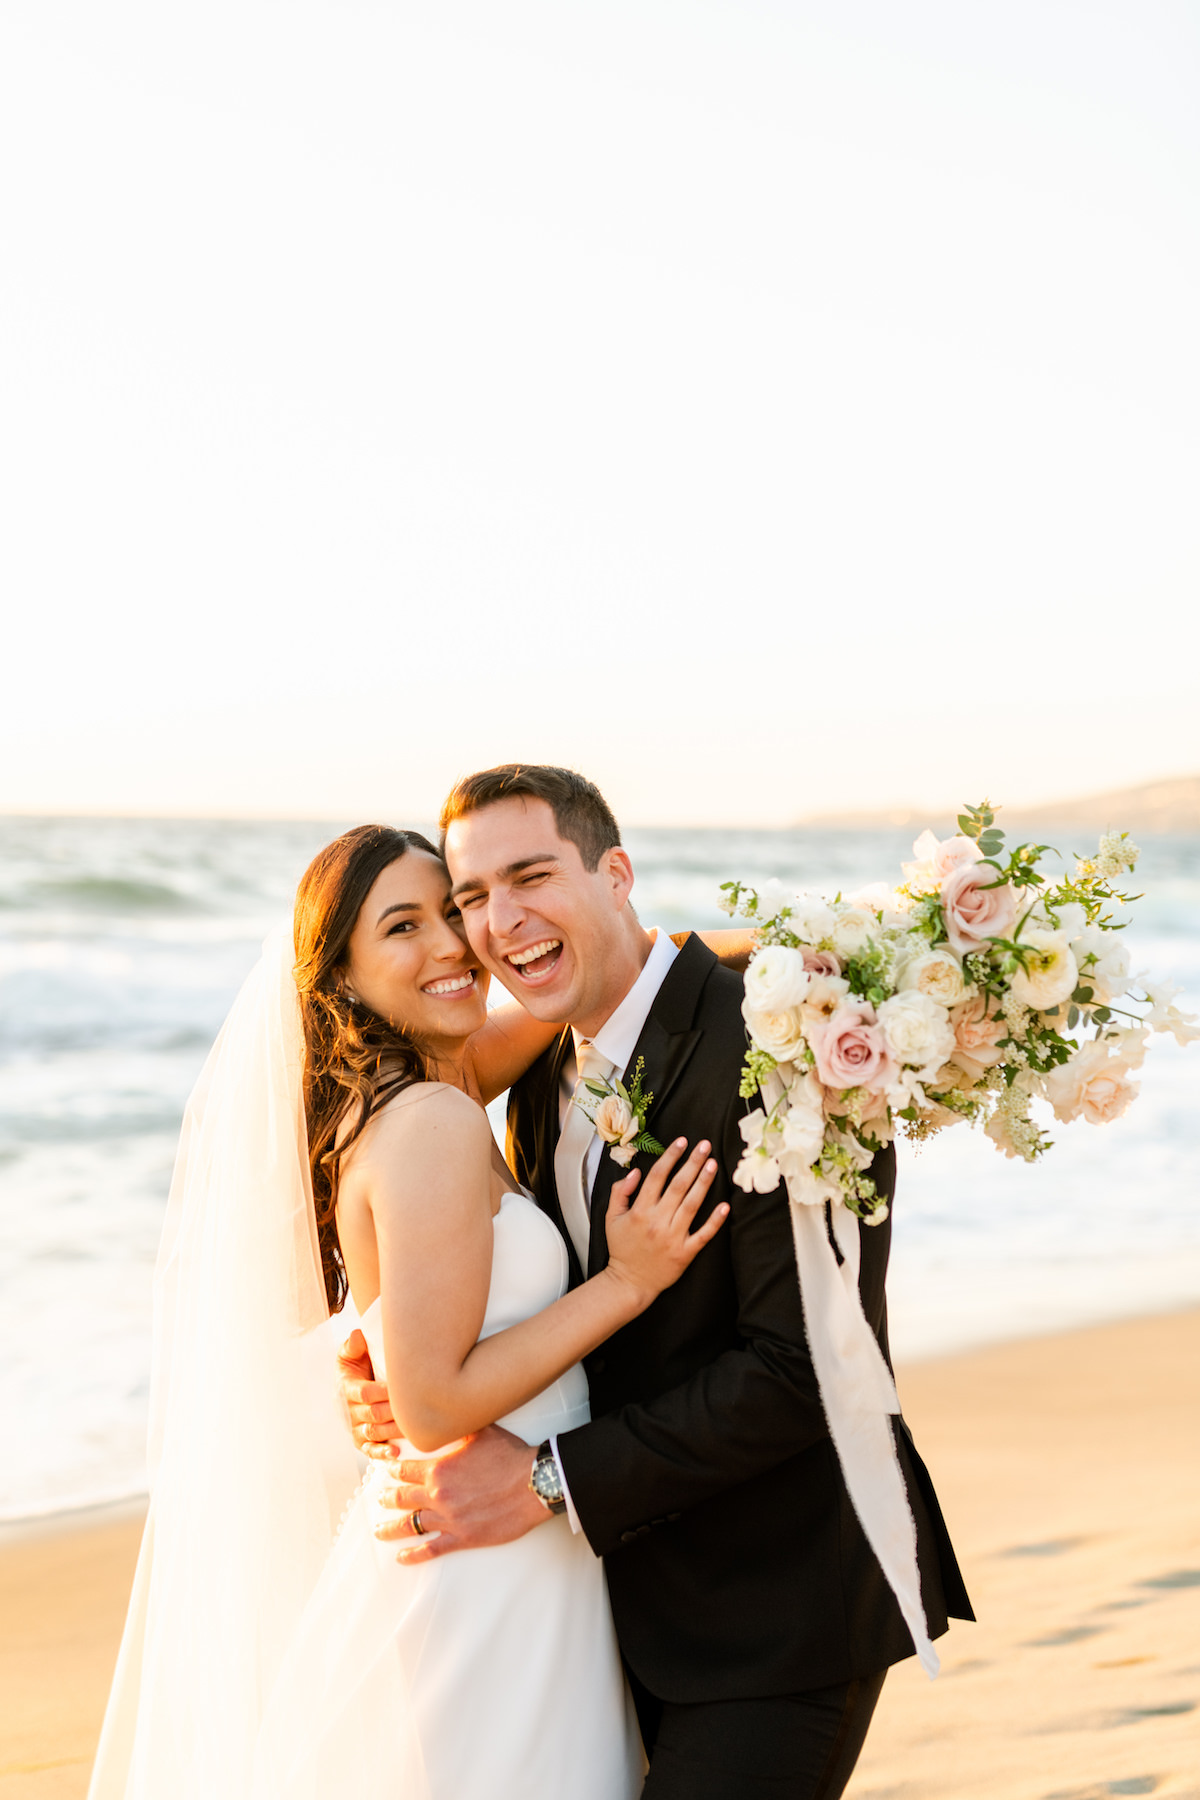 Beach sunset wedding photo - Holly Sigafoos Photo